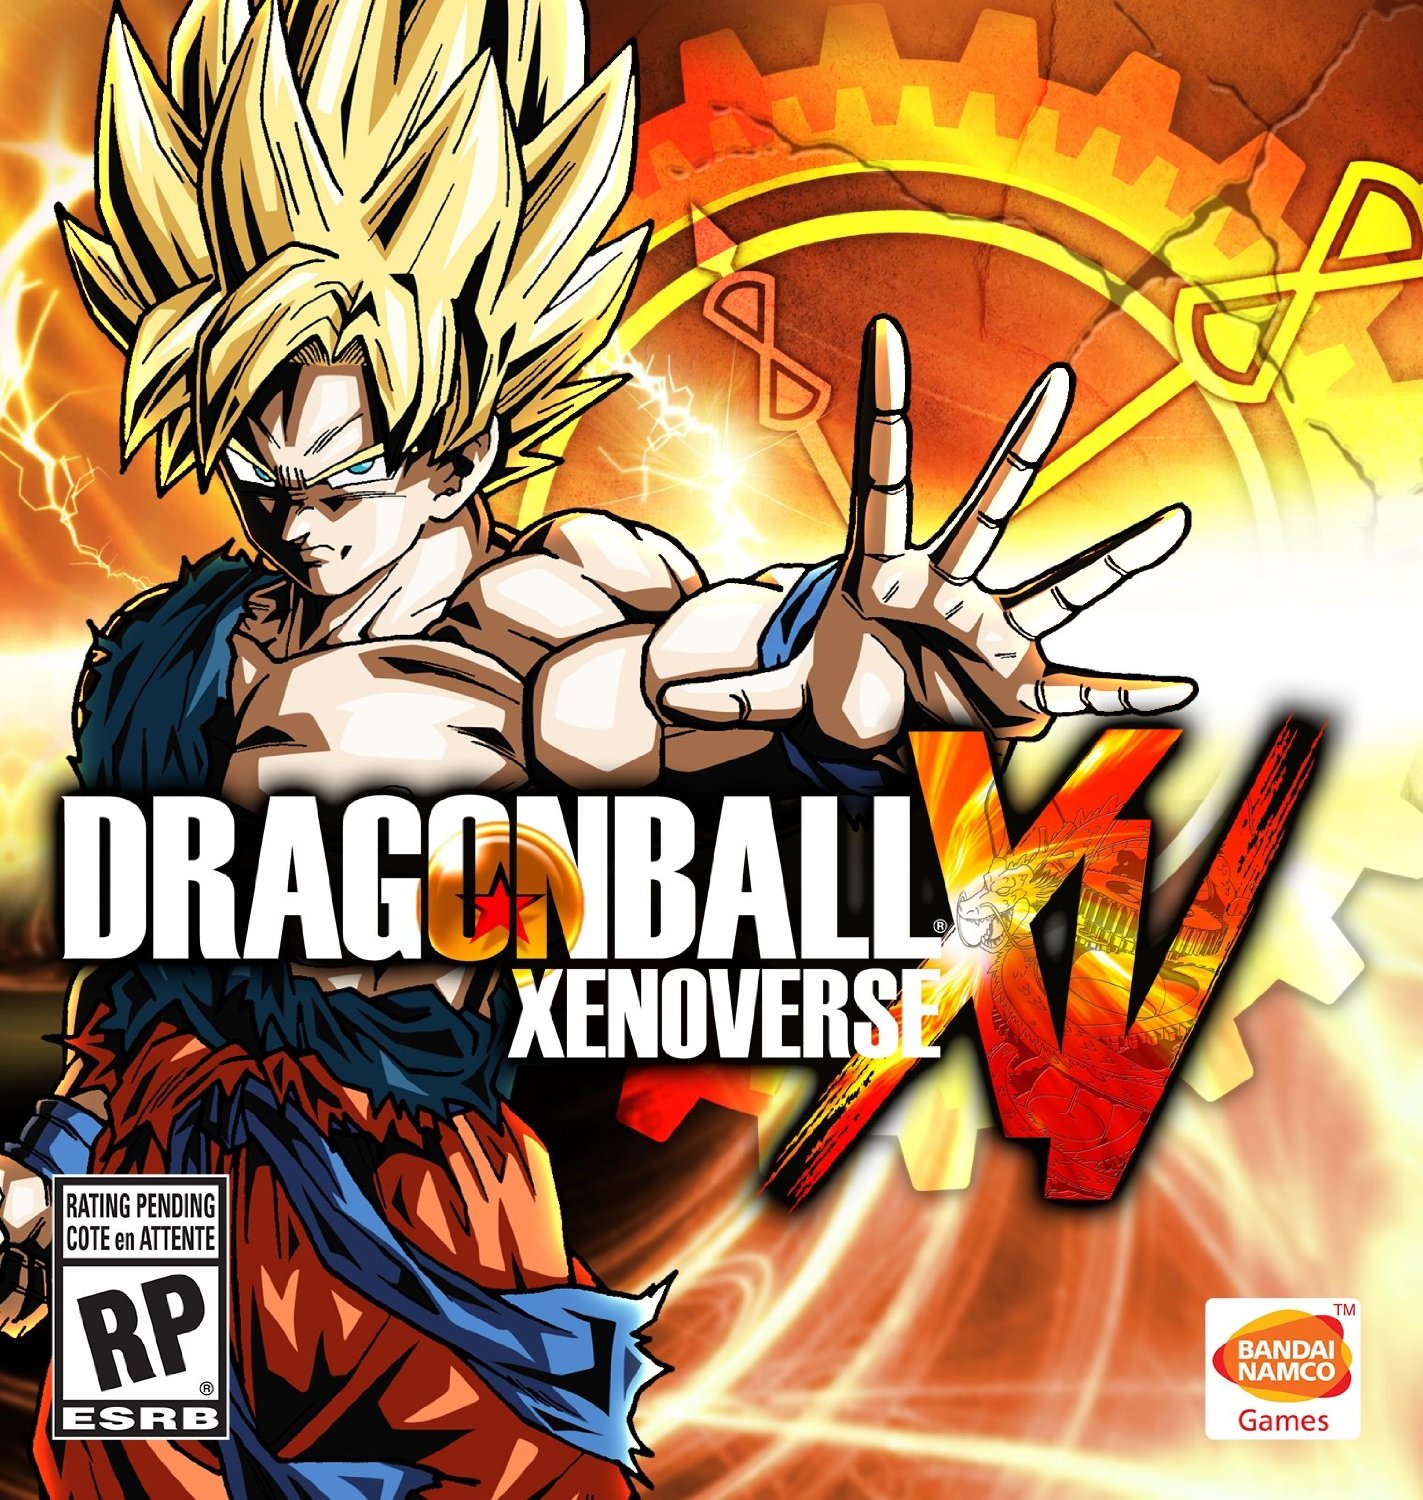 Dragon Ball Xenoverse, Dragon Ball Wiki Brasil